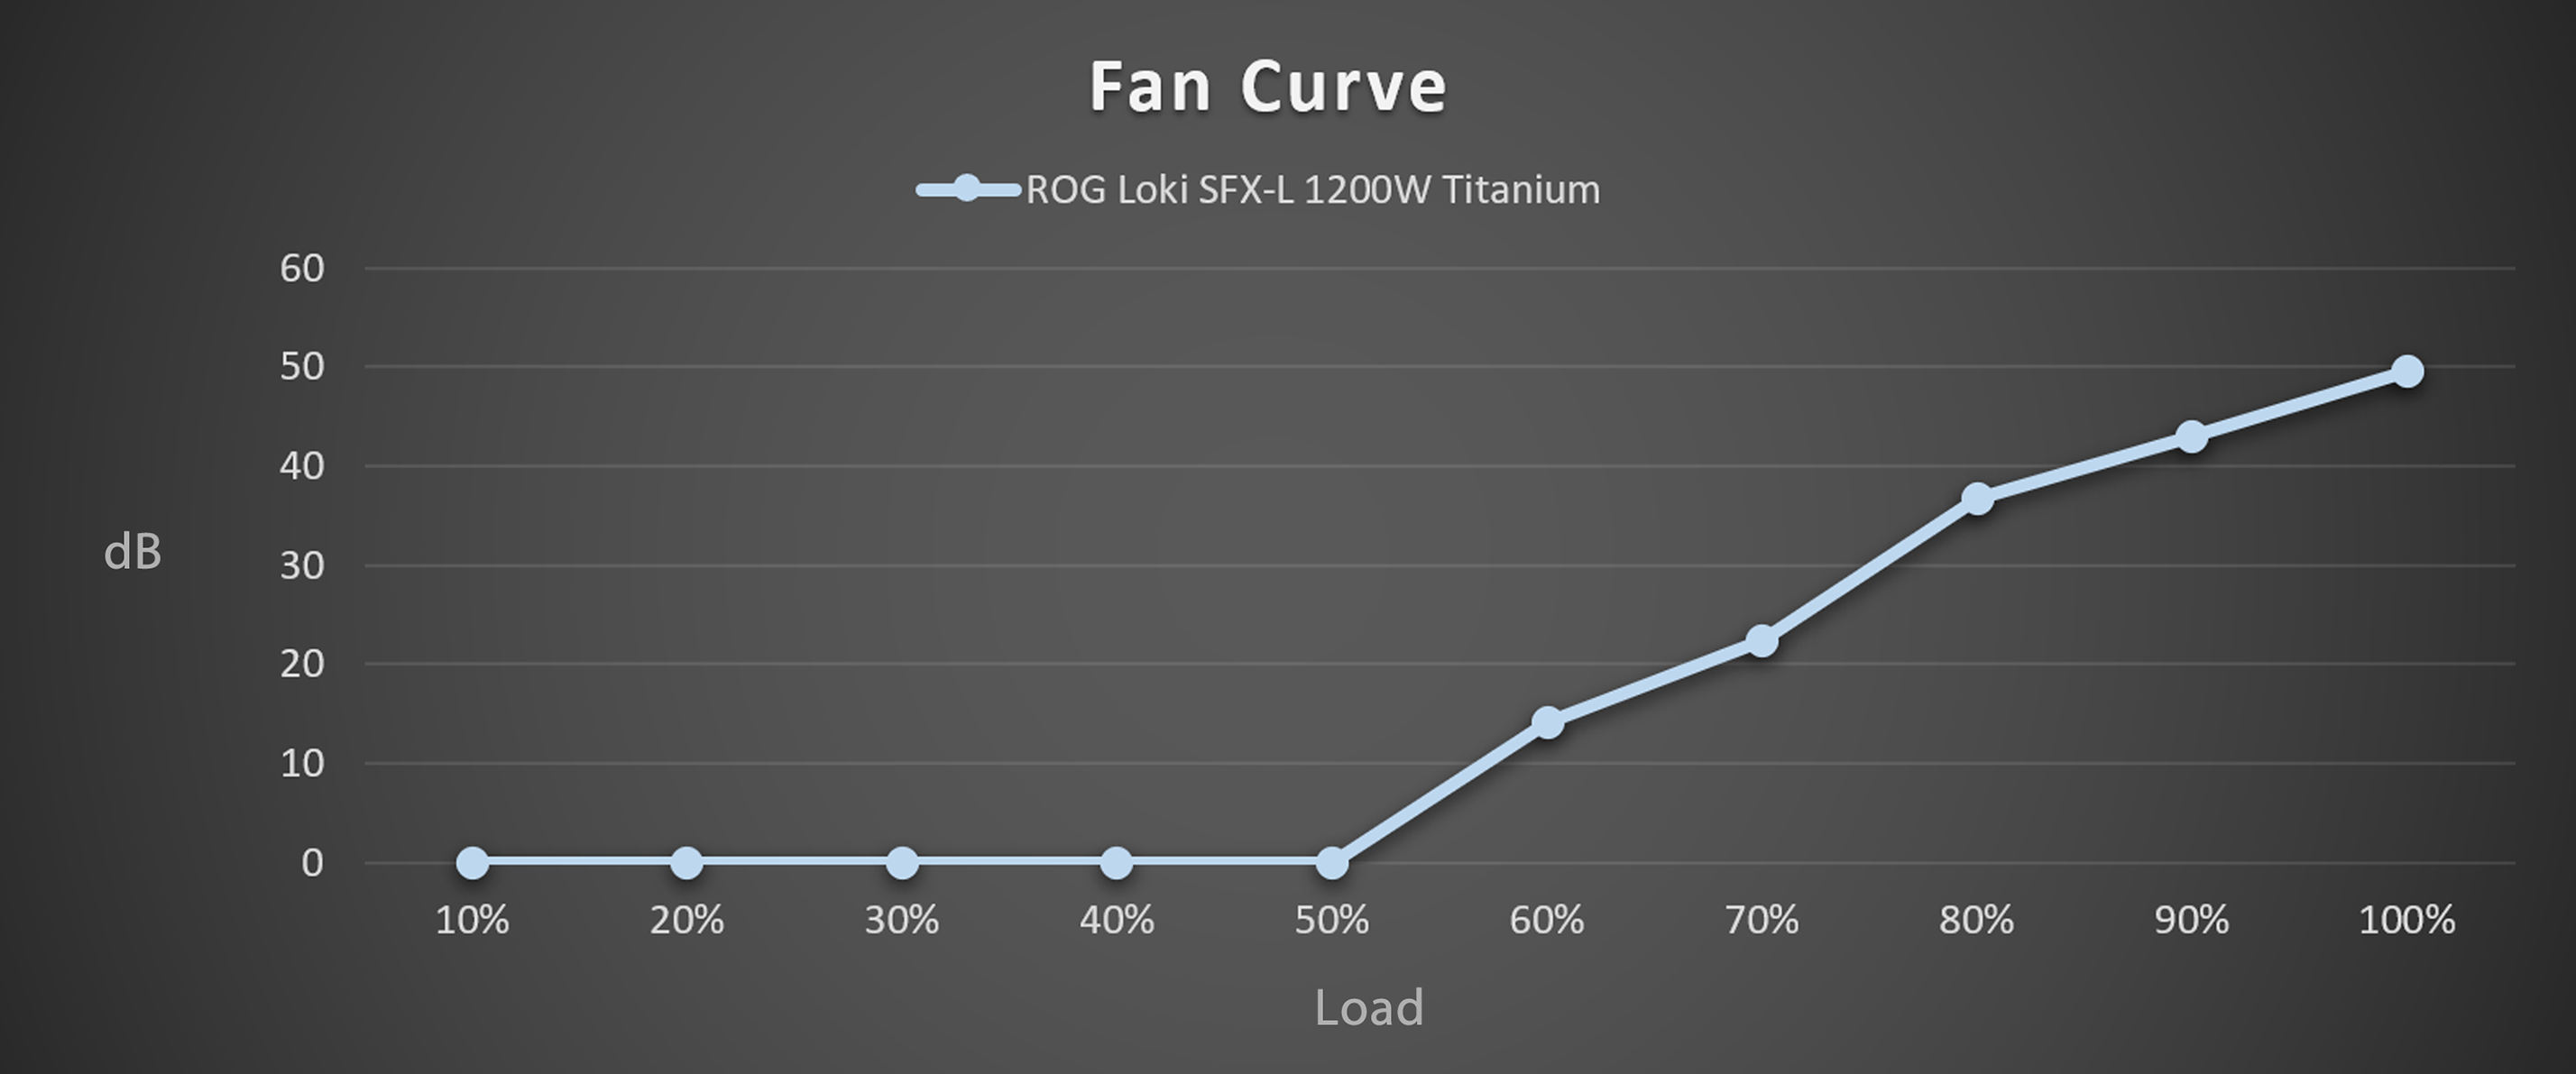 Lüftergeräuschkurve von ROG Loki SFX-L 1200W Titanium